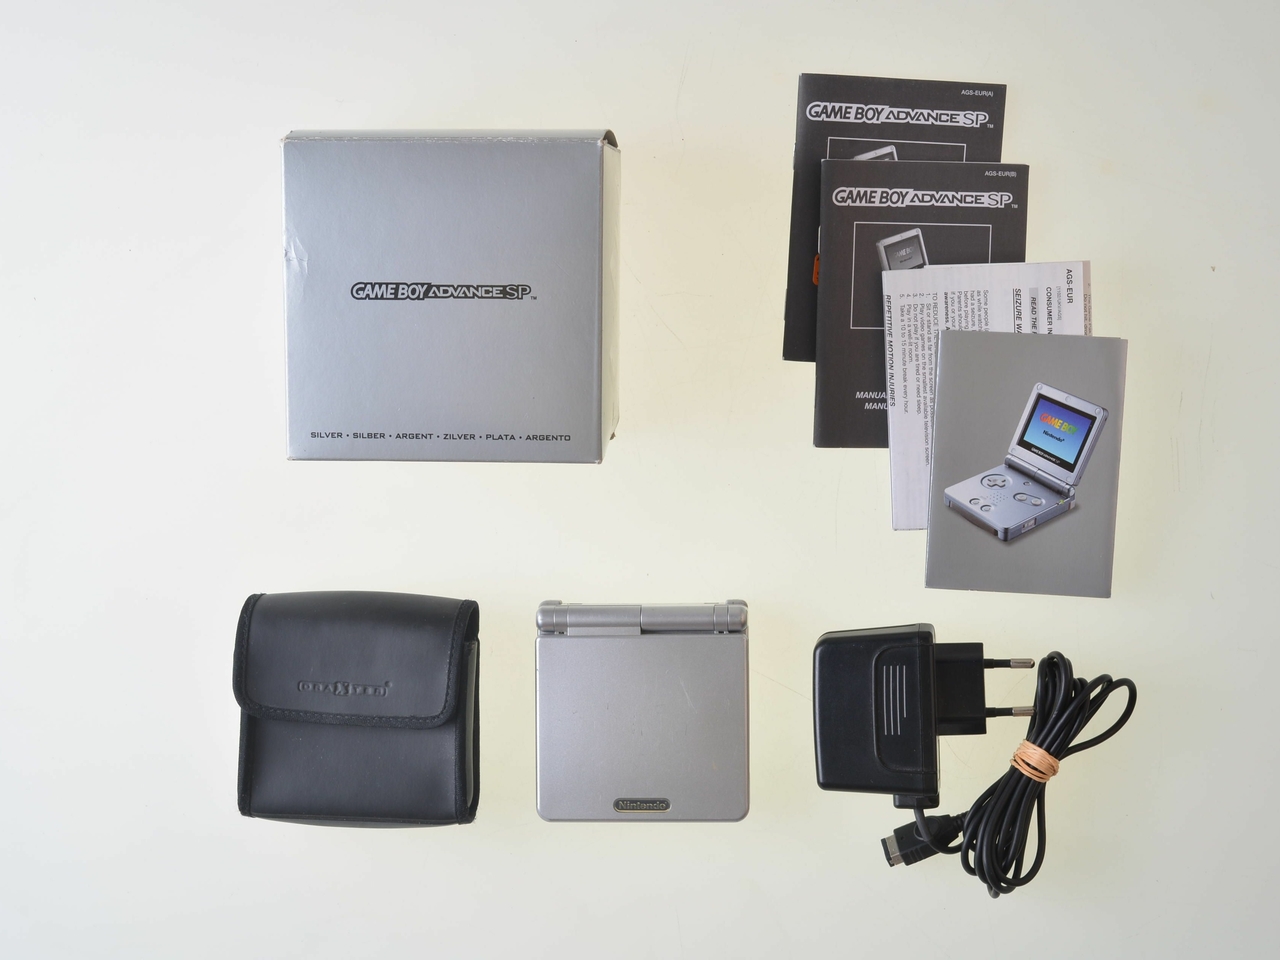 Gameboy Advance SP Silver [Complete] - Gameboy Advance Hardware